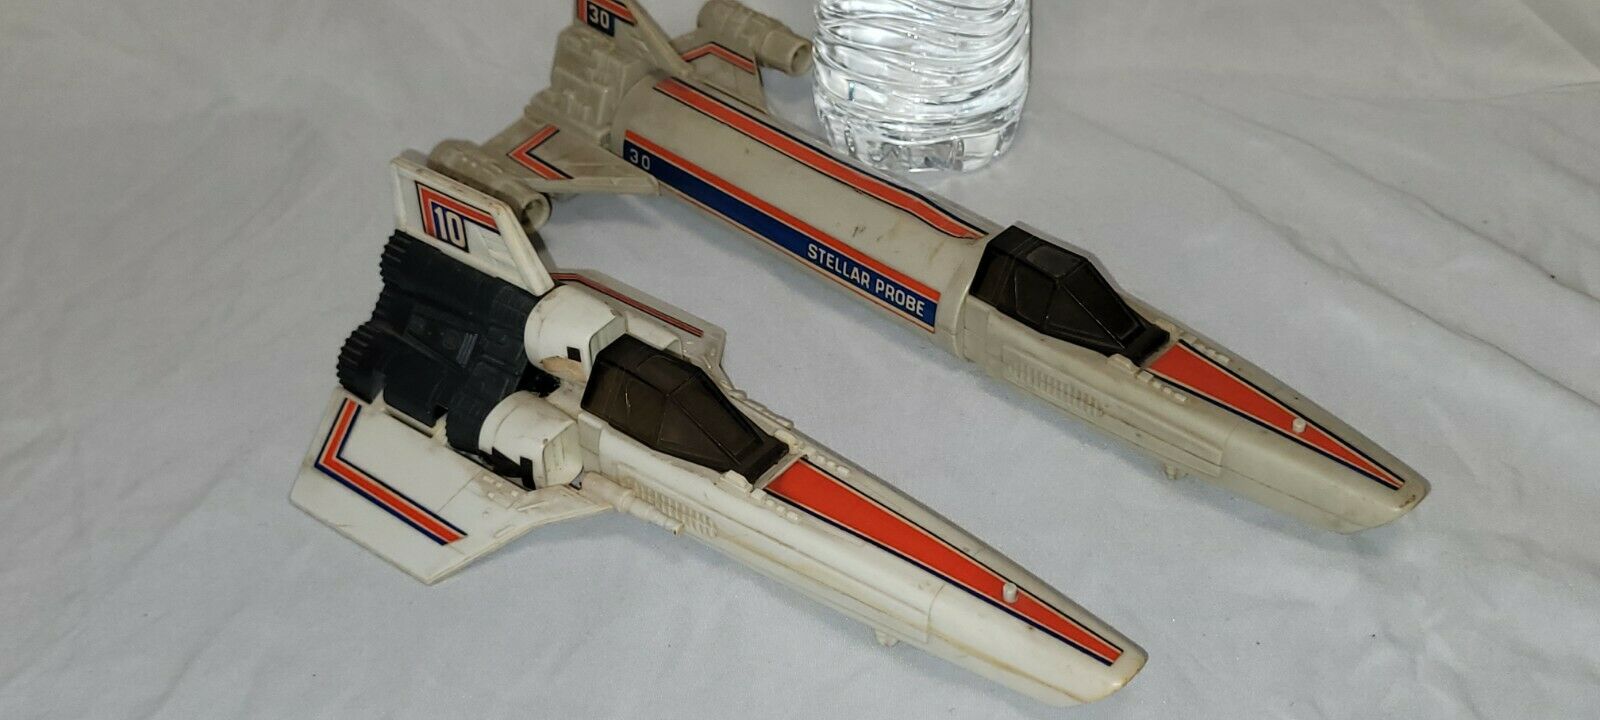 Battlestar Galactica Original 1978 "viper & Stellar Probe" Toys By Mattel